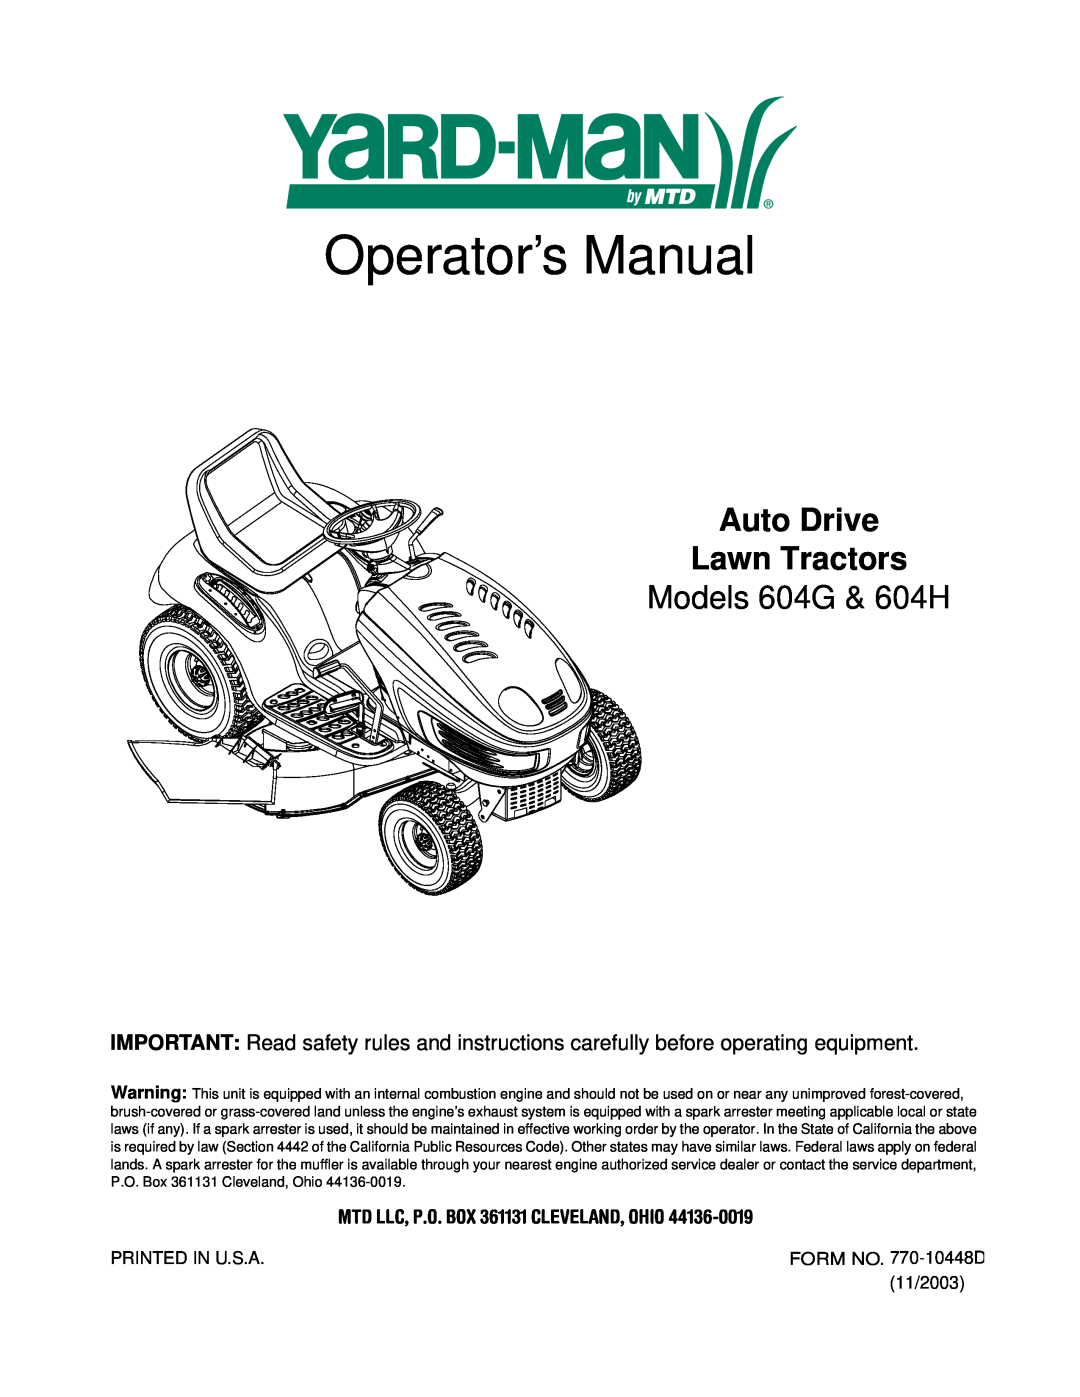 MTD manual Models 604G & 604H, Operator’s Manual, Auto Drive Lawn Tractors, MTD LLC, P.O. BOX 361131 CLEVELAND, OHIO 